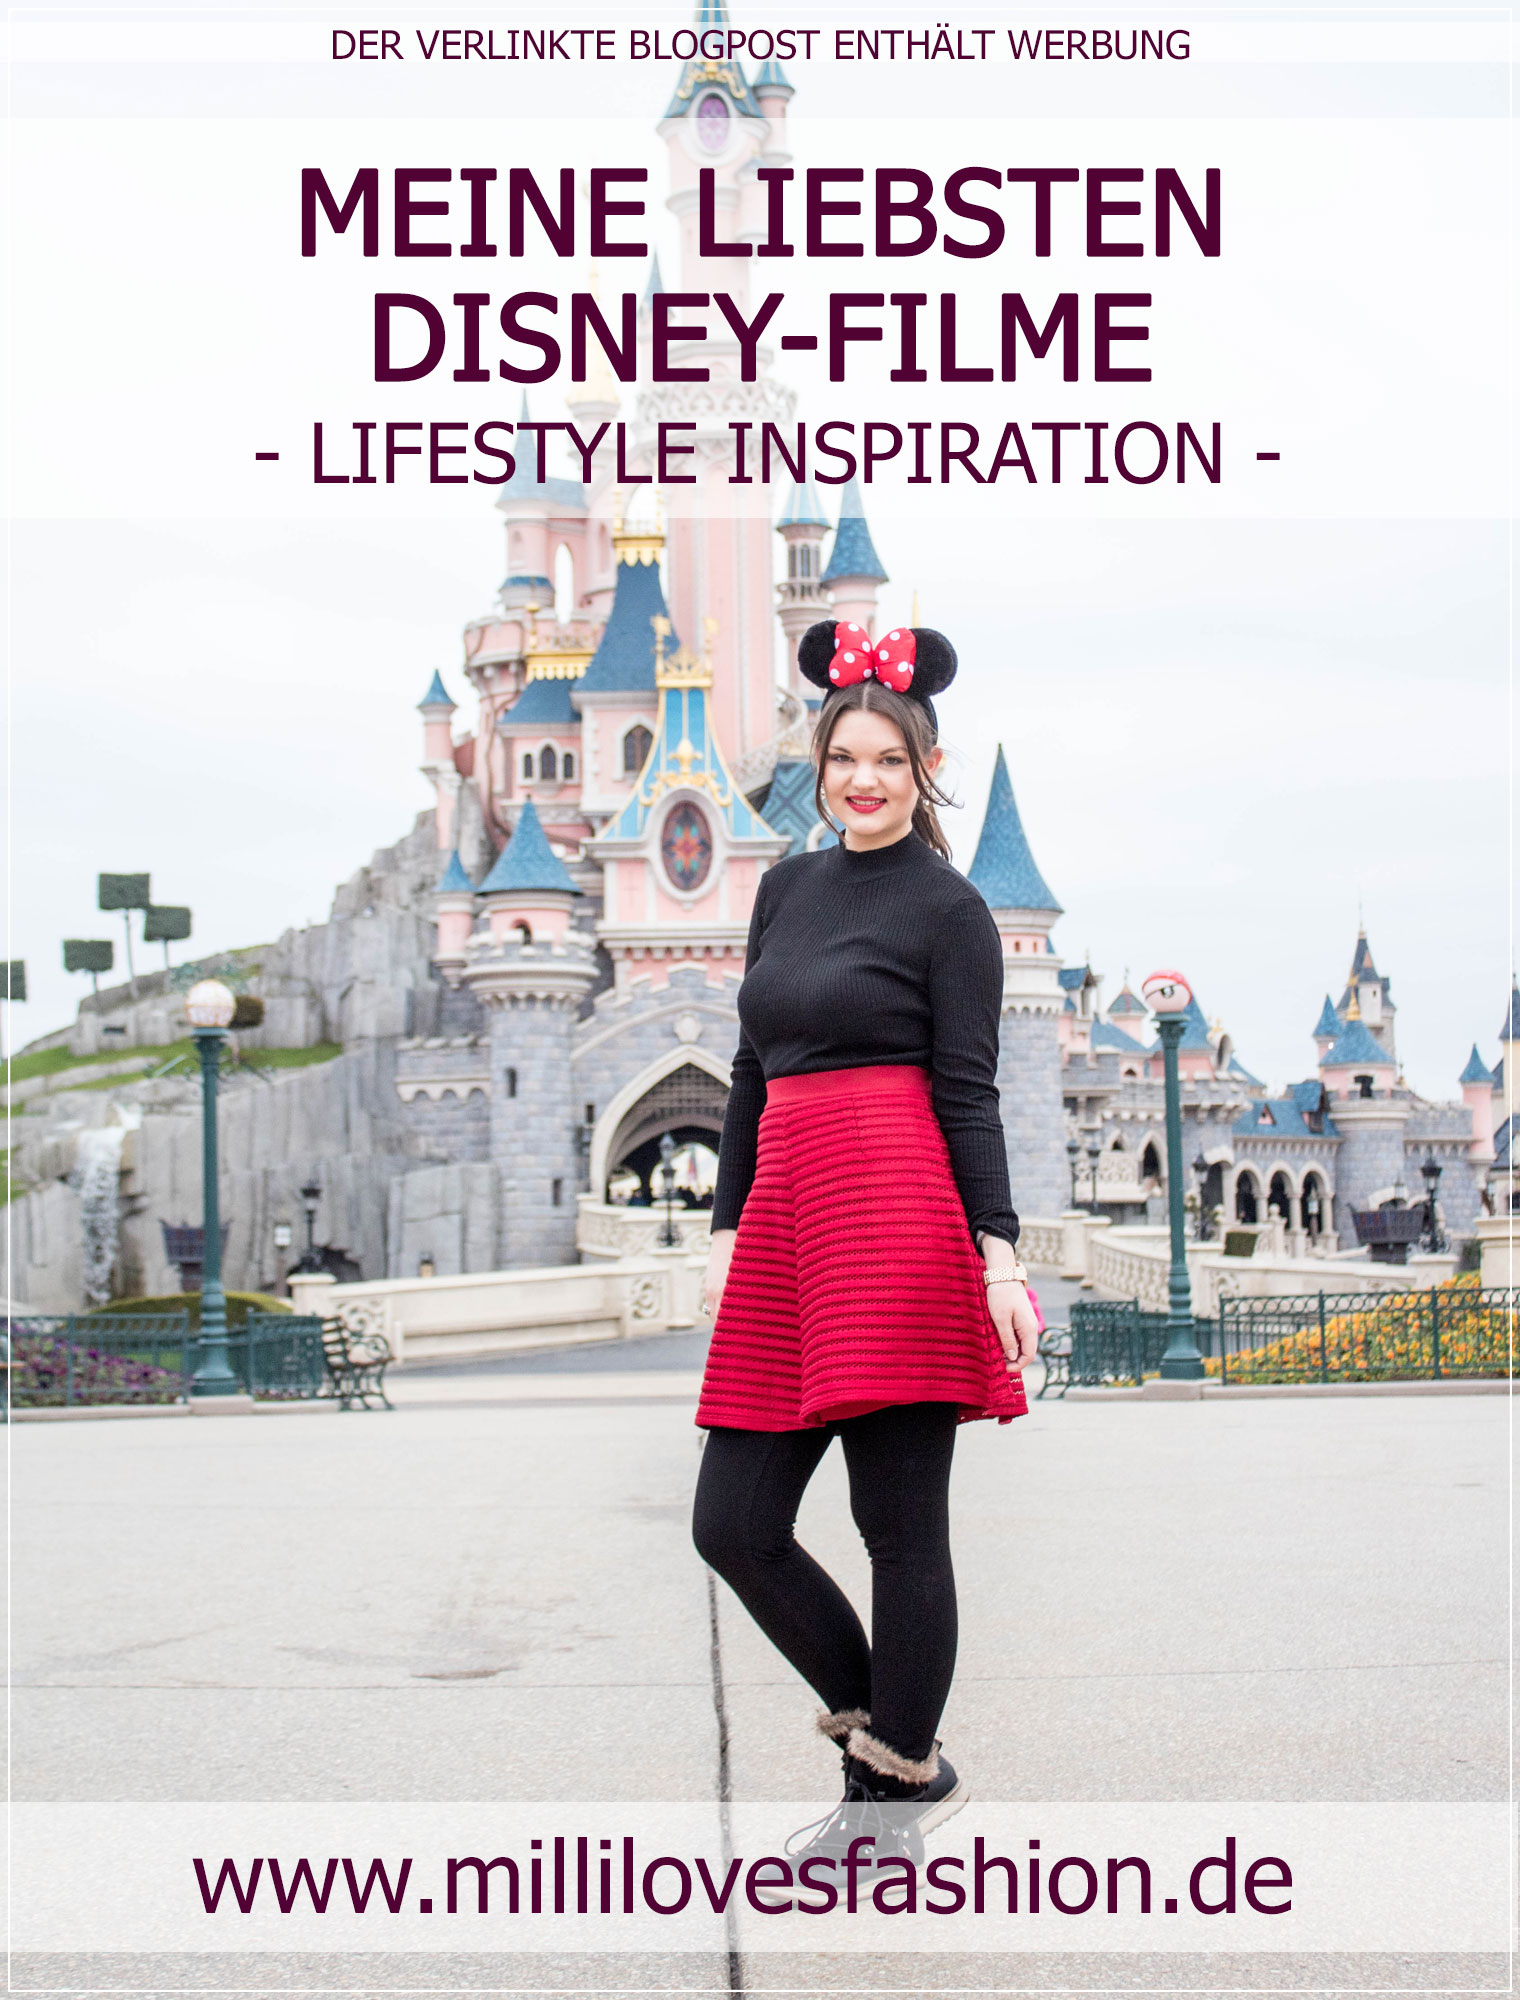 Disney-Filme, Disney, Disney-Blog, Disney-Zauber, Filmempfehlung, Blog, Ruhrgebiet, Modeblog